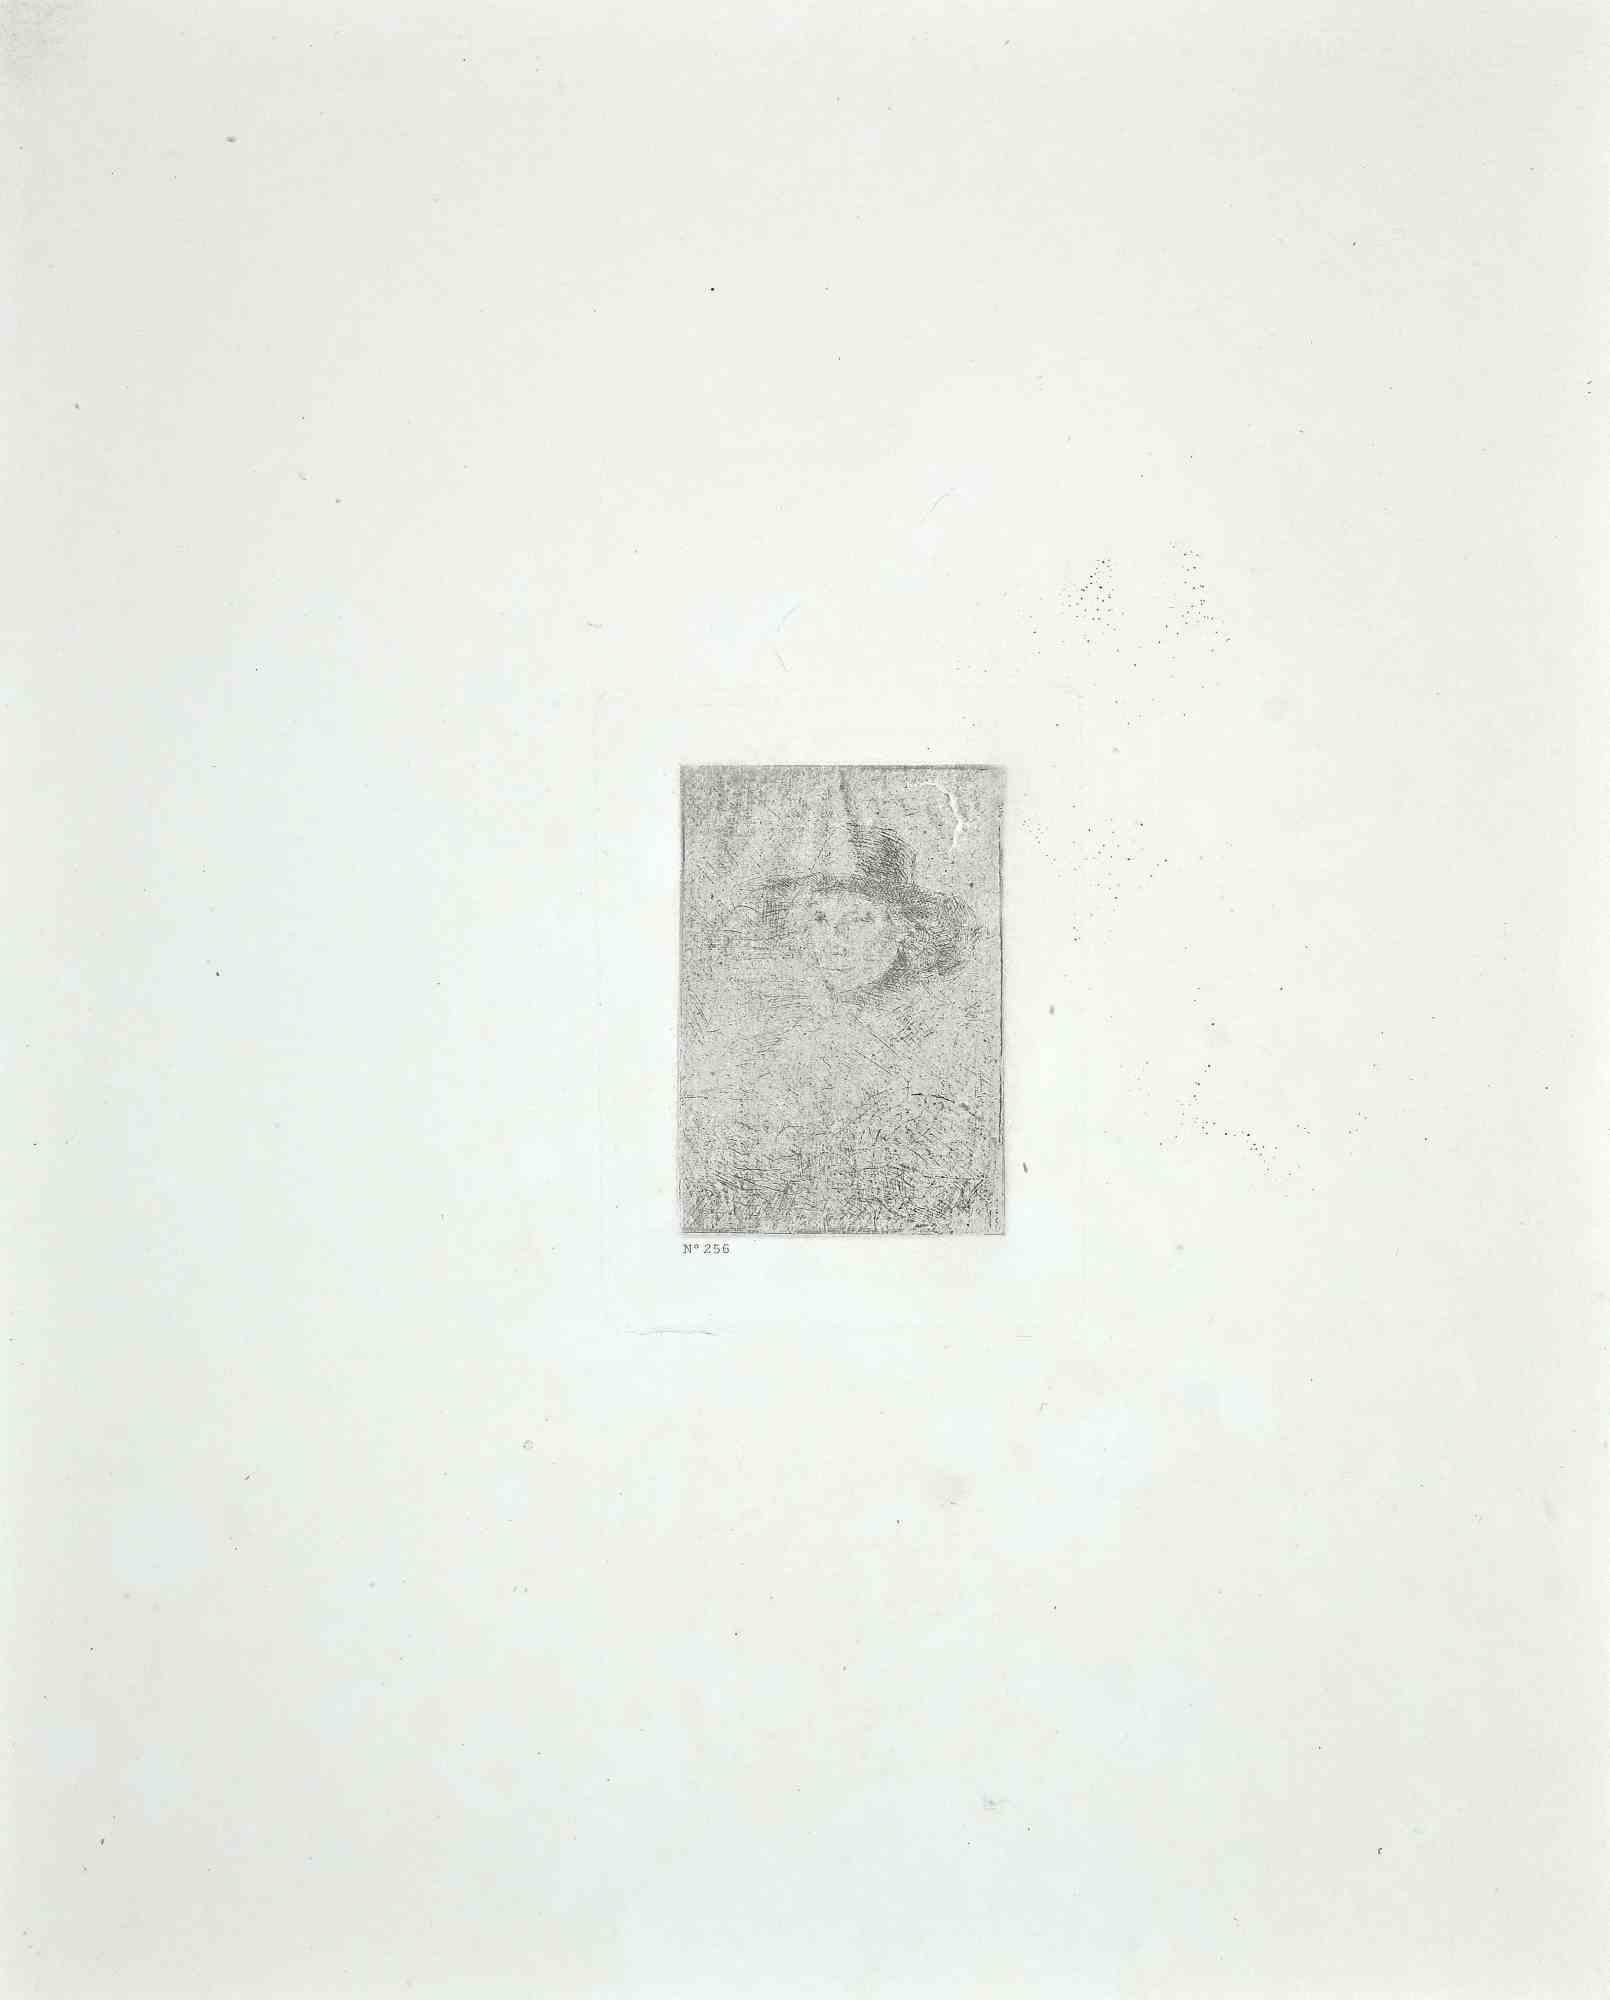 Charles Amand Durand Portrait Print - Portrait - Engraving after Rembrandt - 19th Century